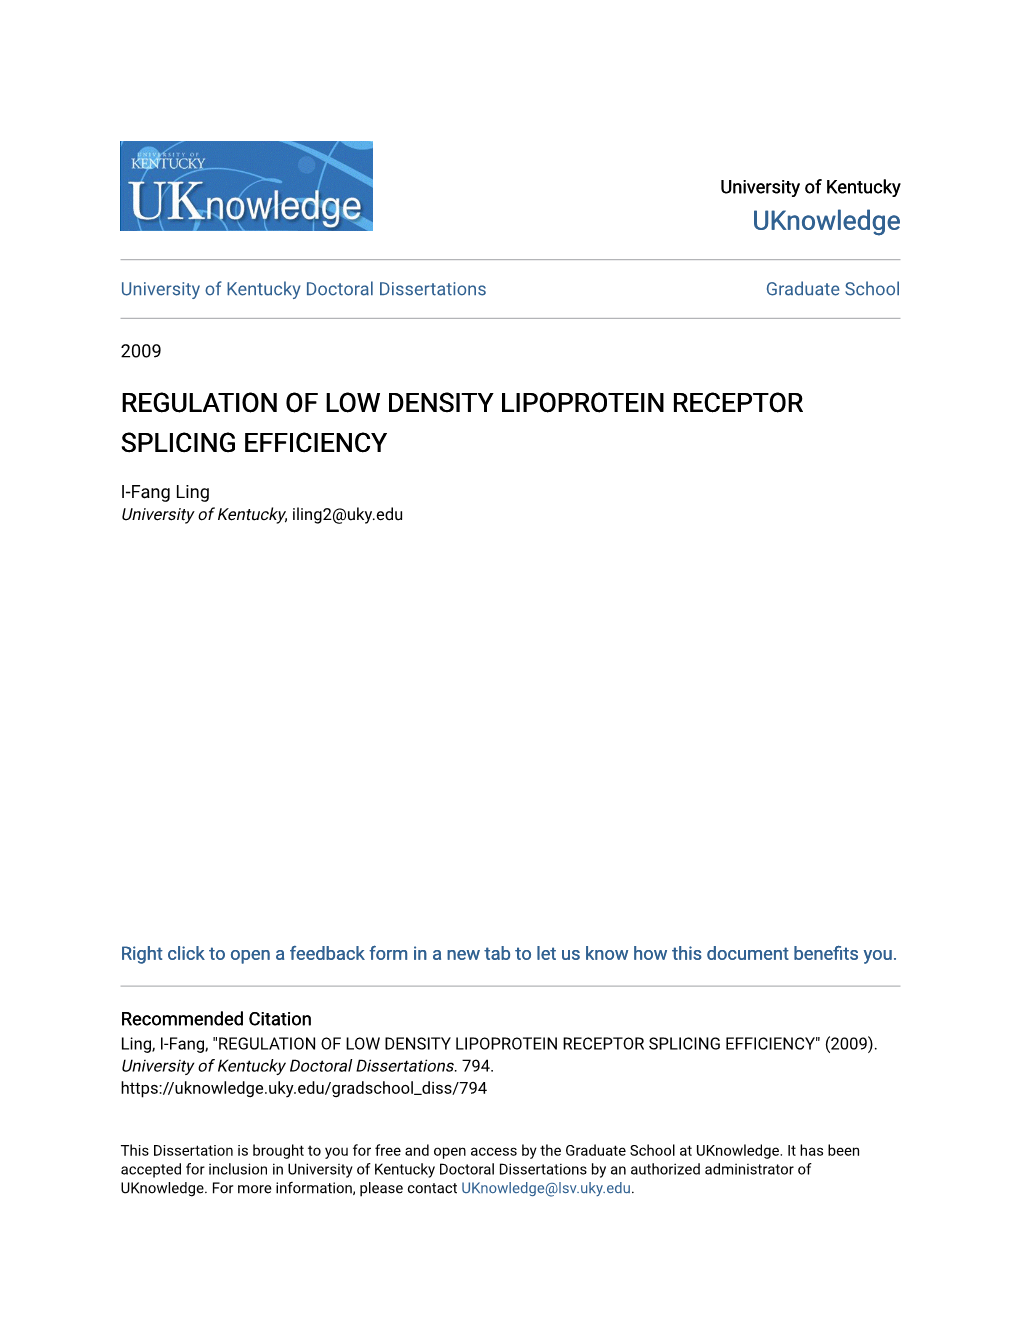 Regulation of Low Density Lipoprotein Receptor Splicing Efficiency